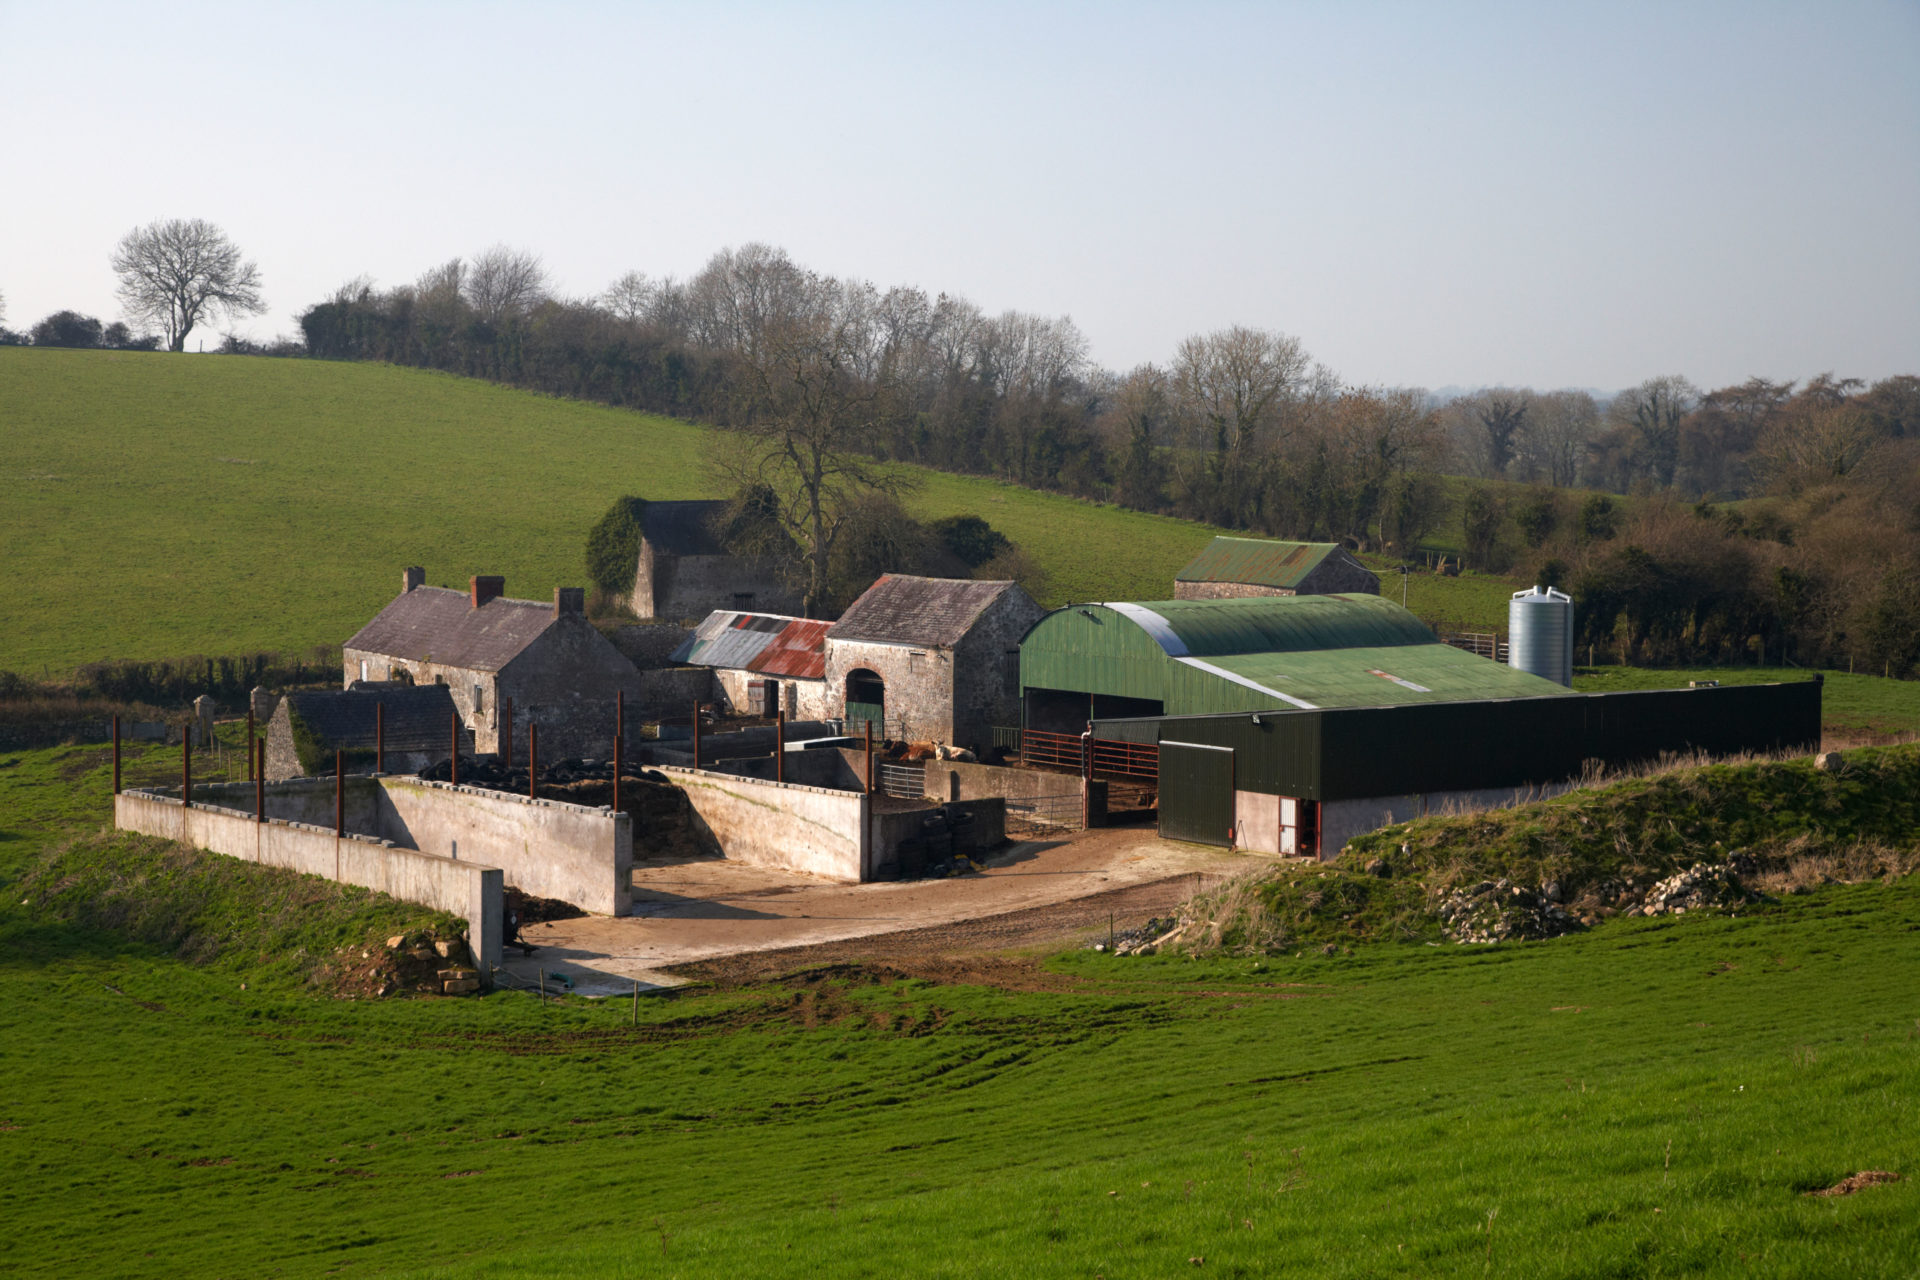 Small enclosed Irish farm in the countryside.